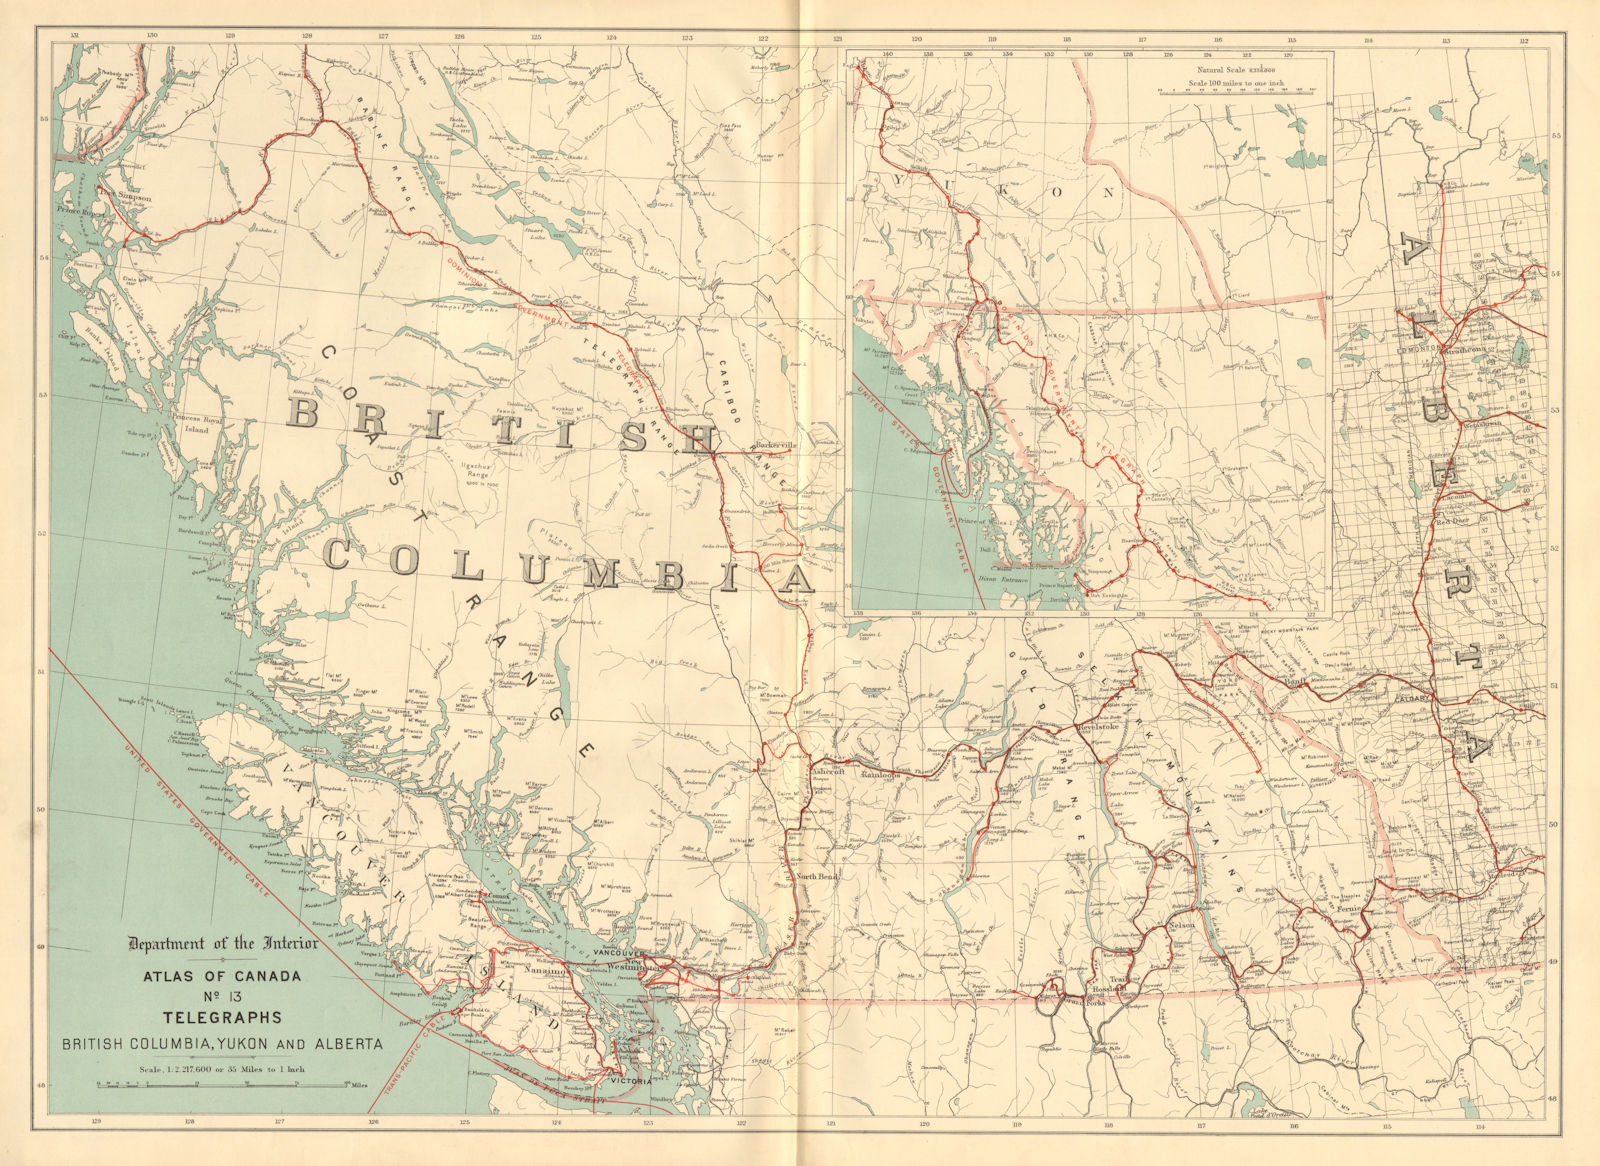 British Columbia, Yukon and Alberta. TELEGRAPH CABLES. Canada. WHITE 1906 map